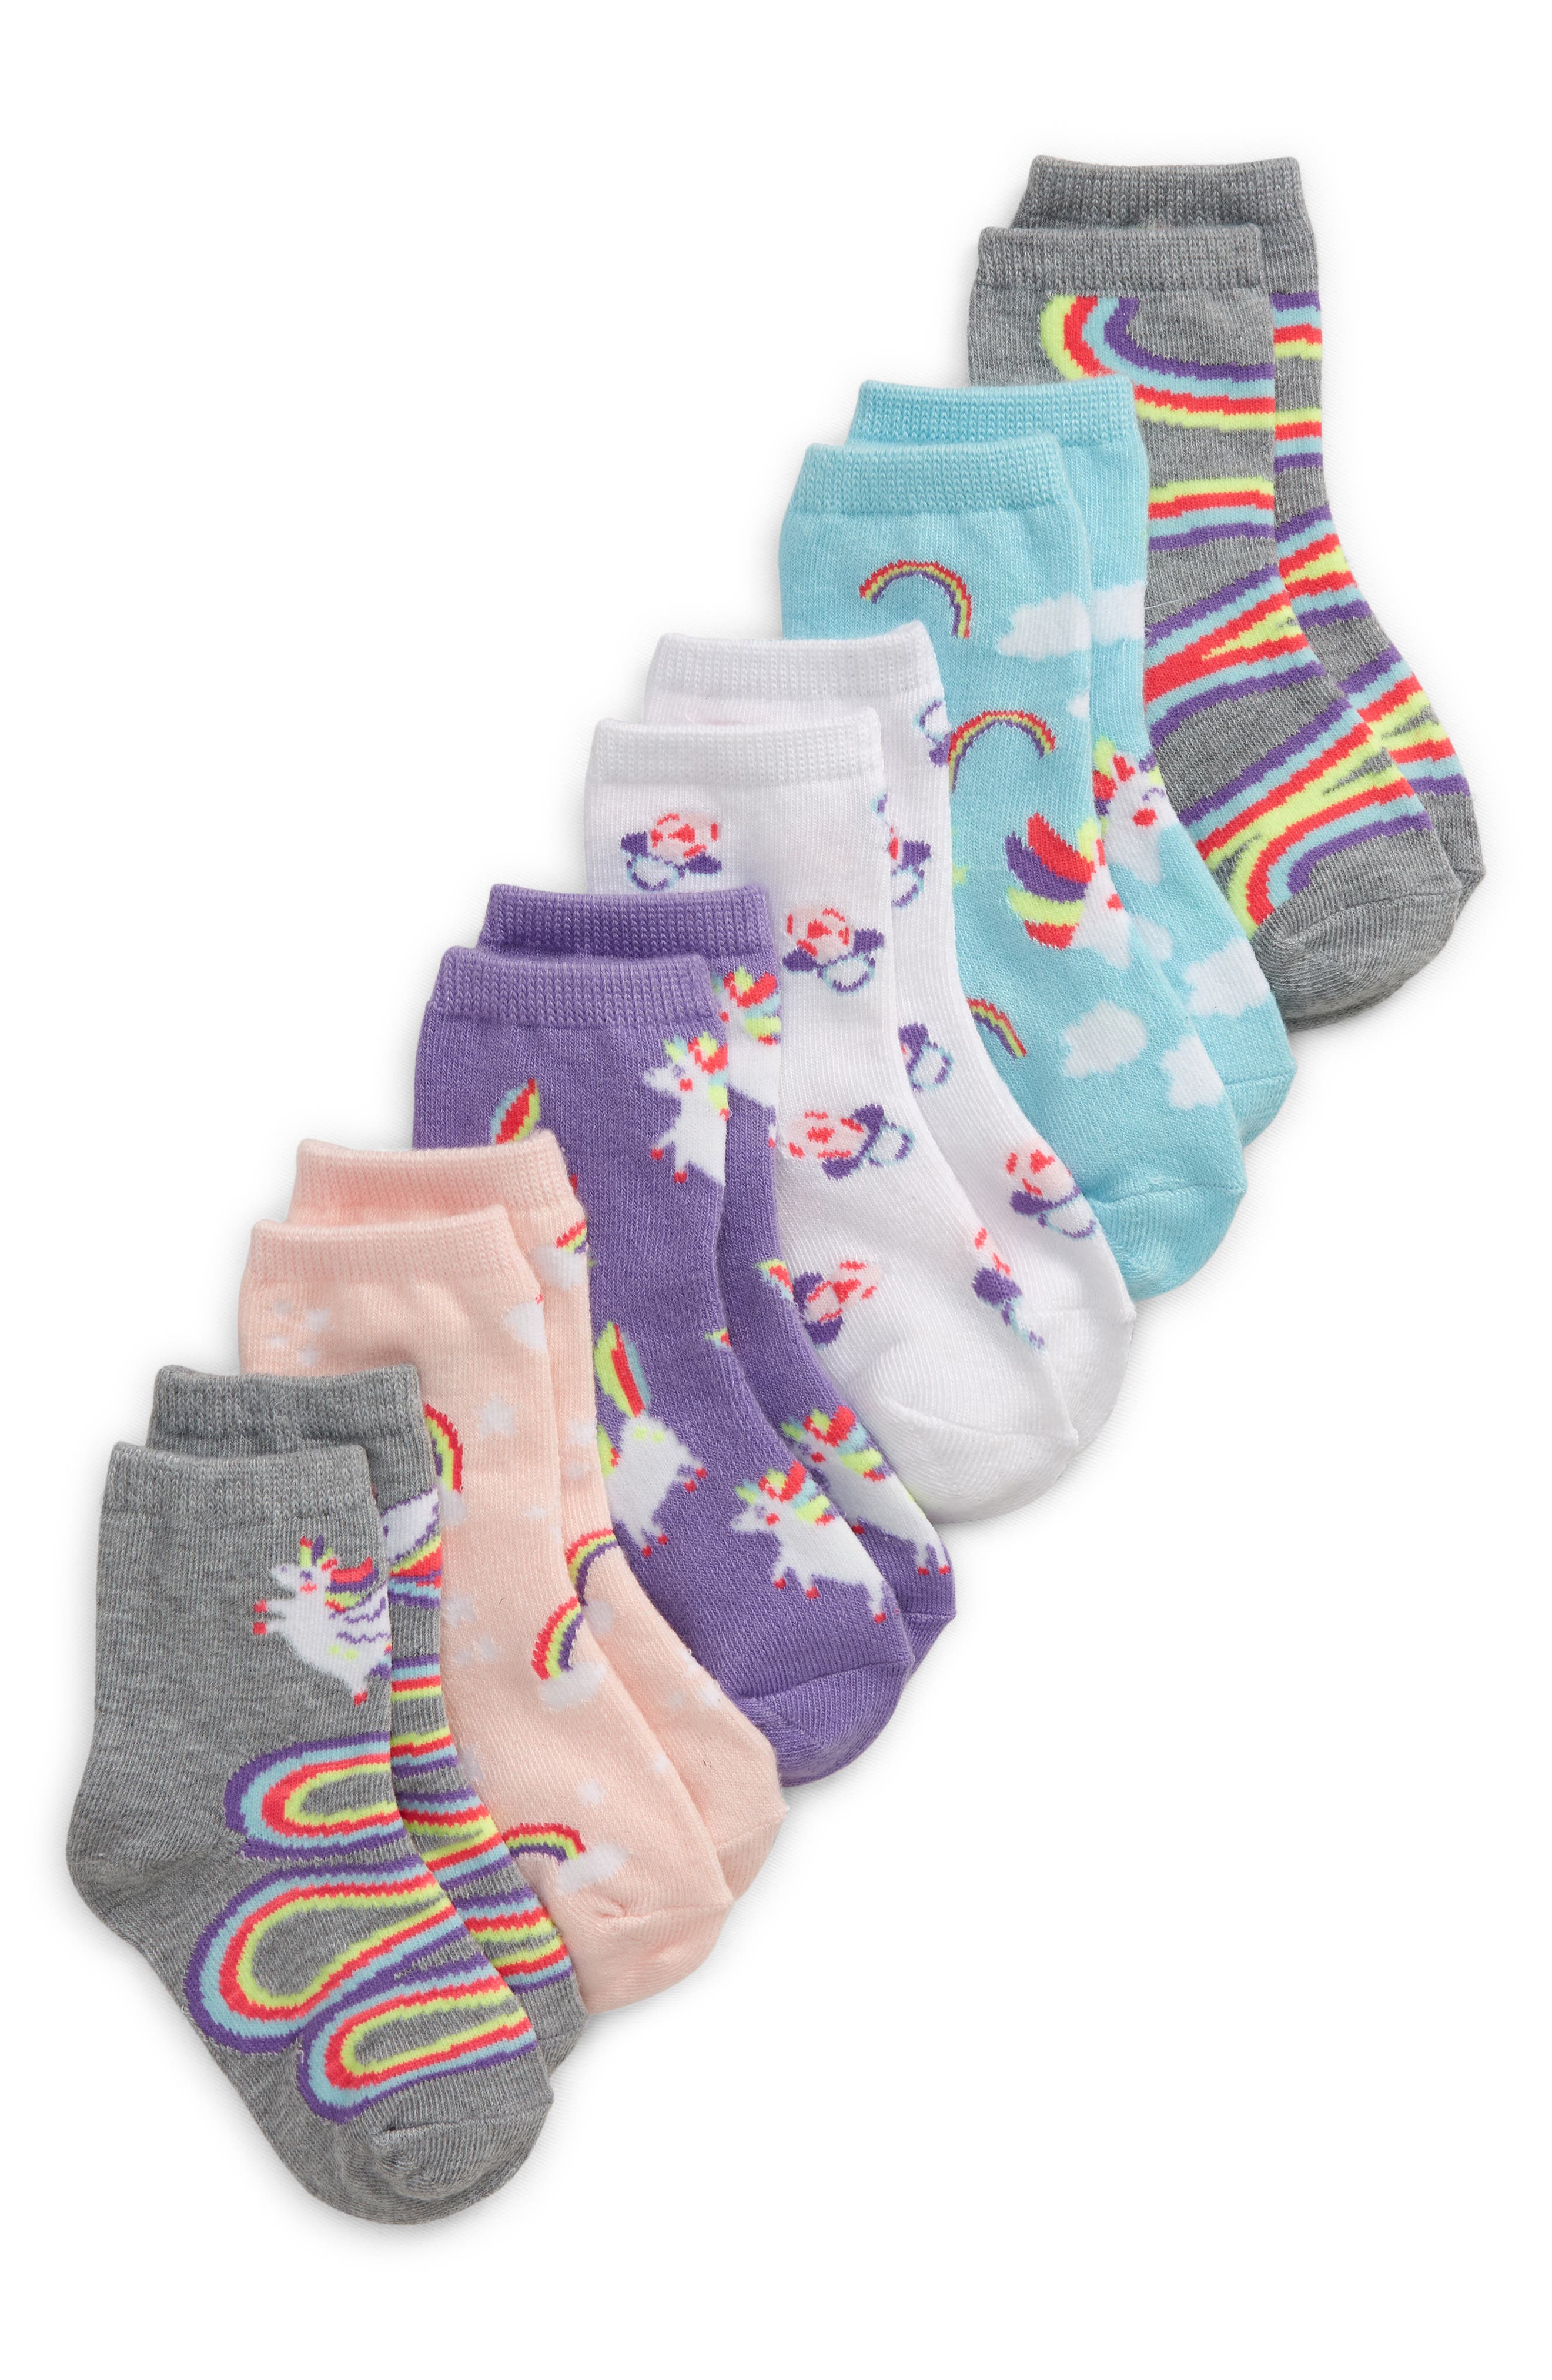 Nordstrom Clothing Underwear Socks Kids Assorted 6-Pack Quarter Socks in Silly Unicorn Pack at Nordstrom 